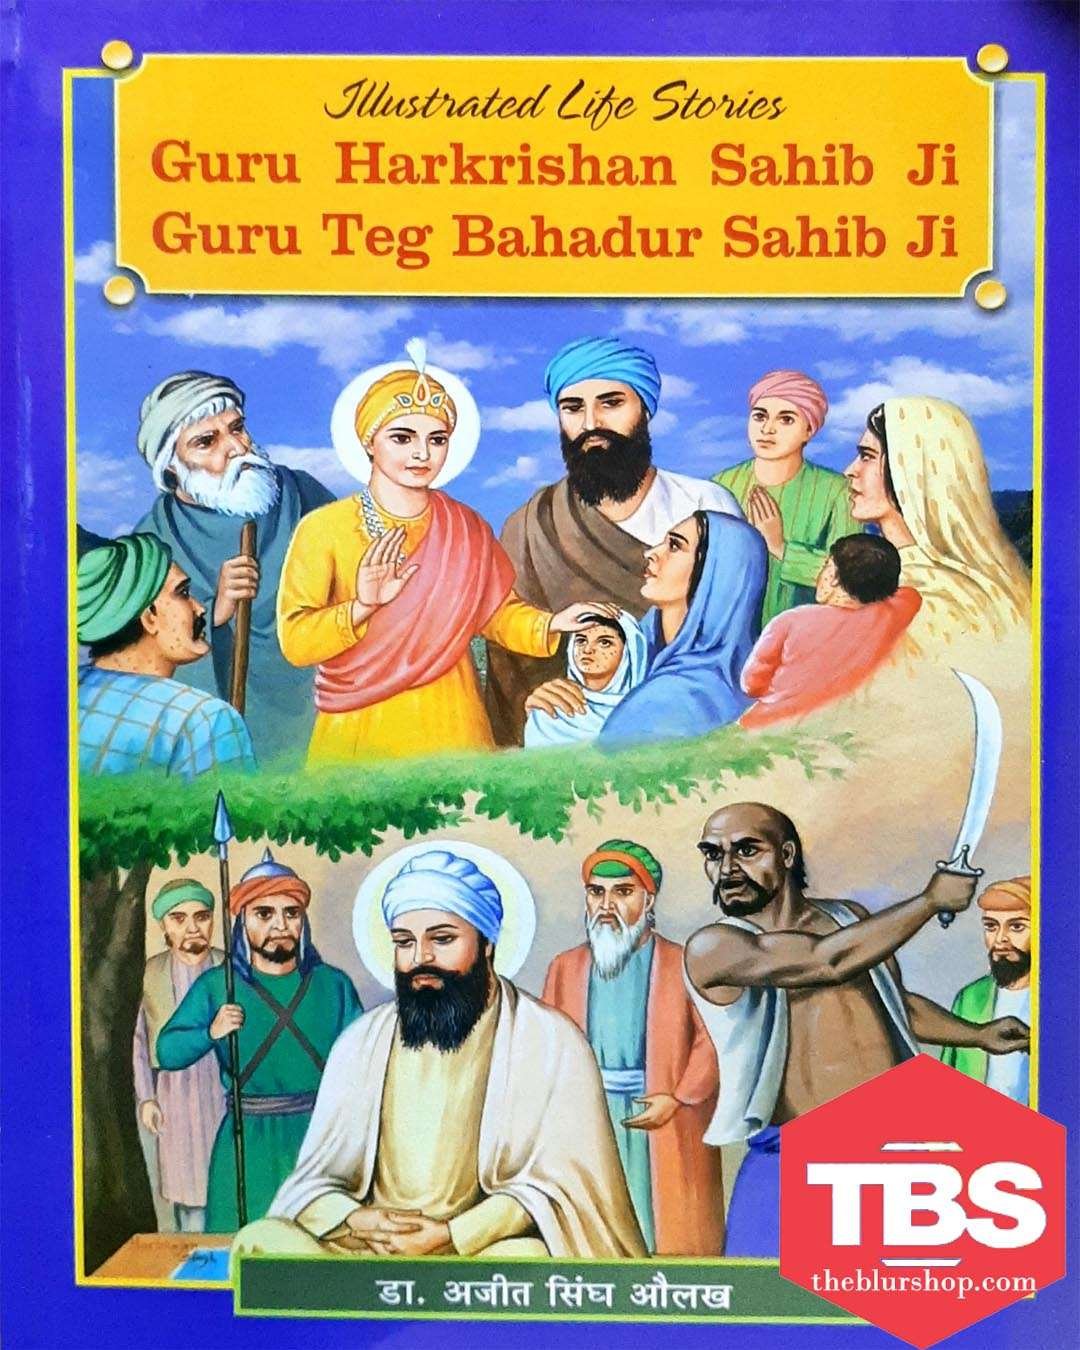 Illustrated Life Stories of Guru Harkrishan Sahib Ji, Guru Teg Bahadur Sahib Ji